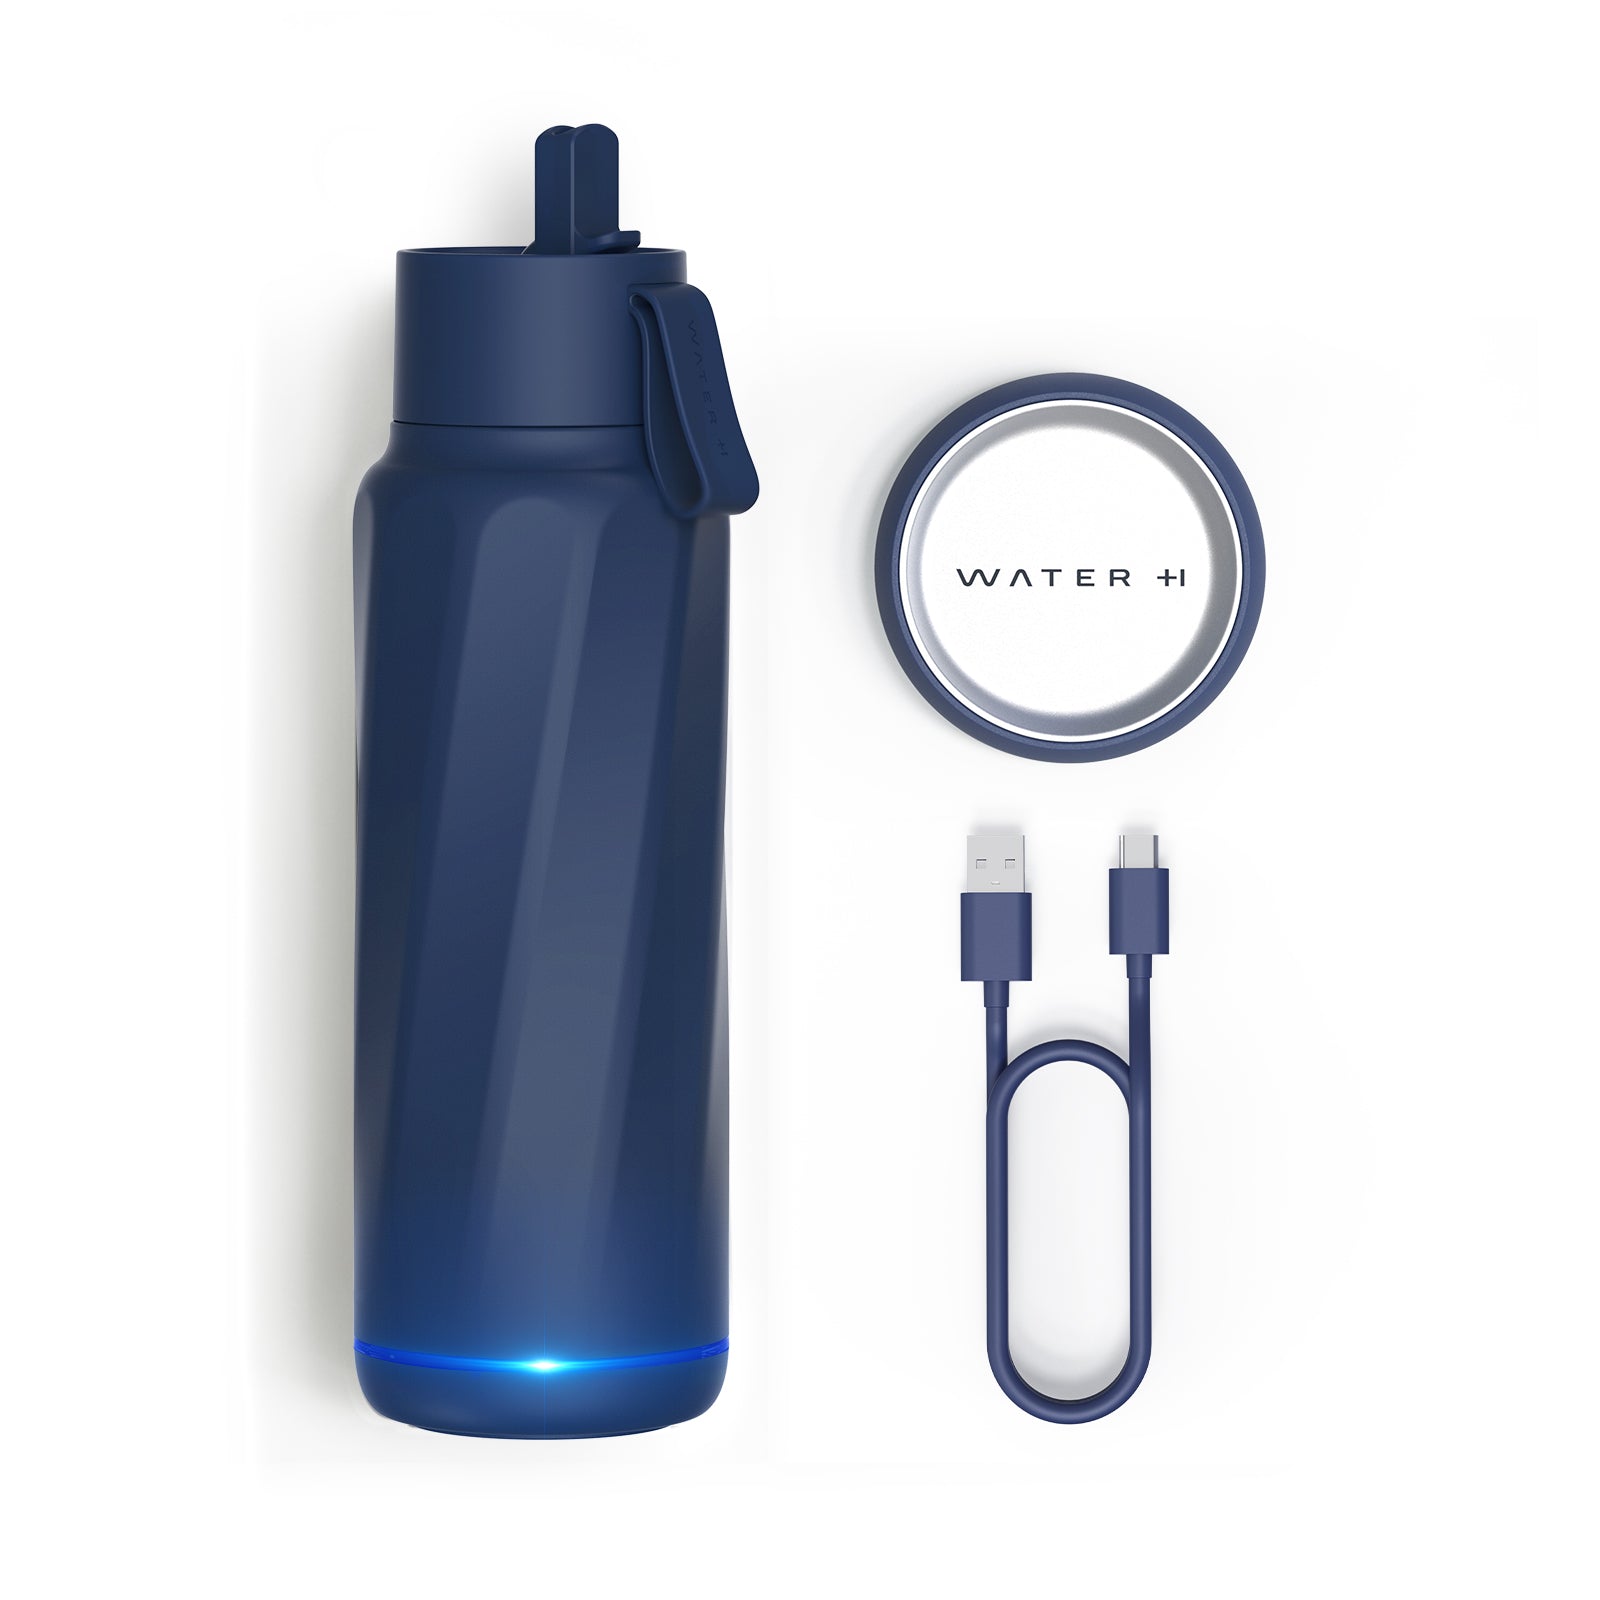 WaterH Launches Smart Bottle That Tracks Intake, Analyzes Water - WICZ